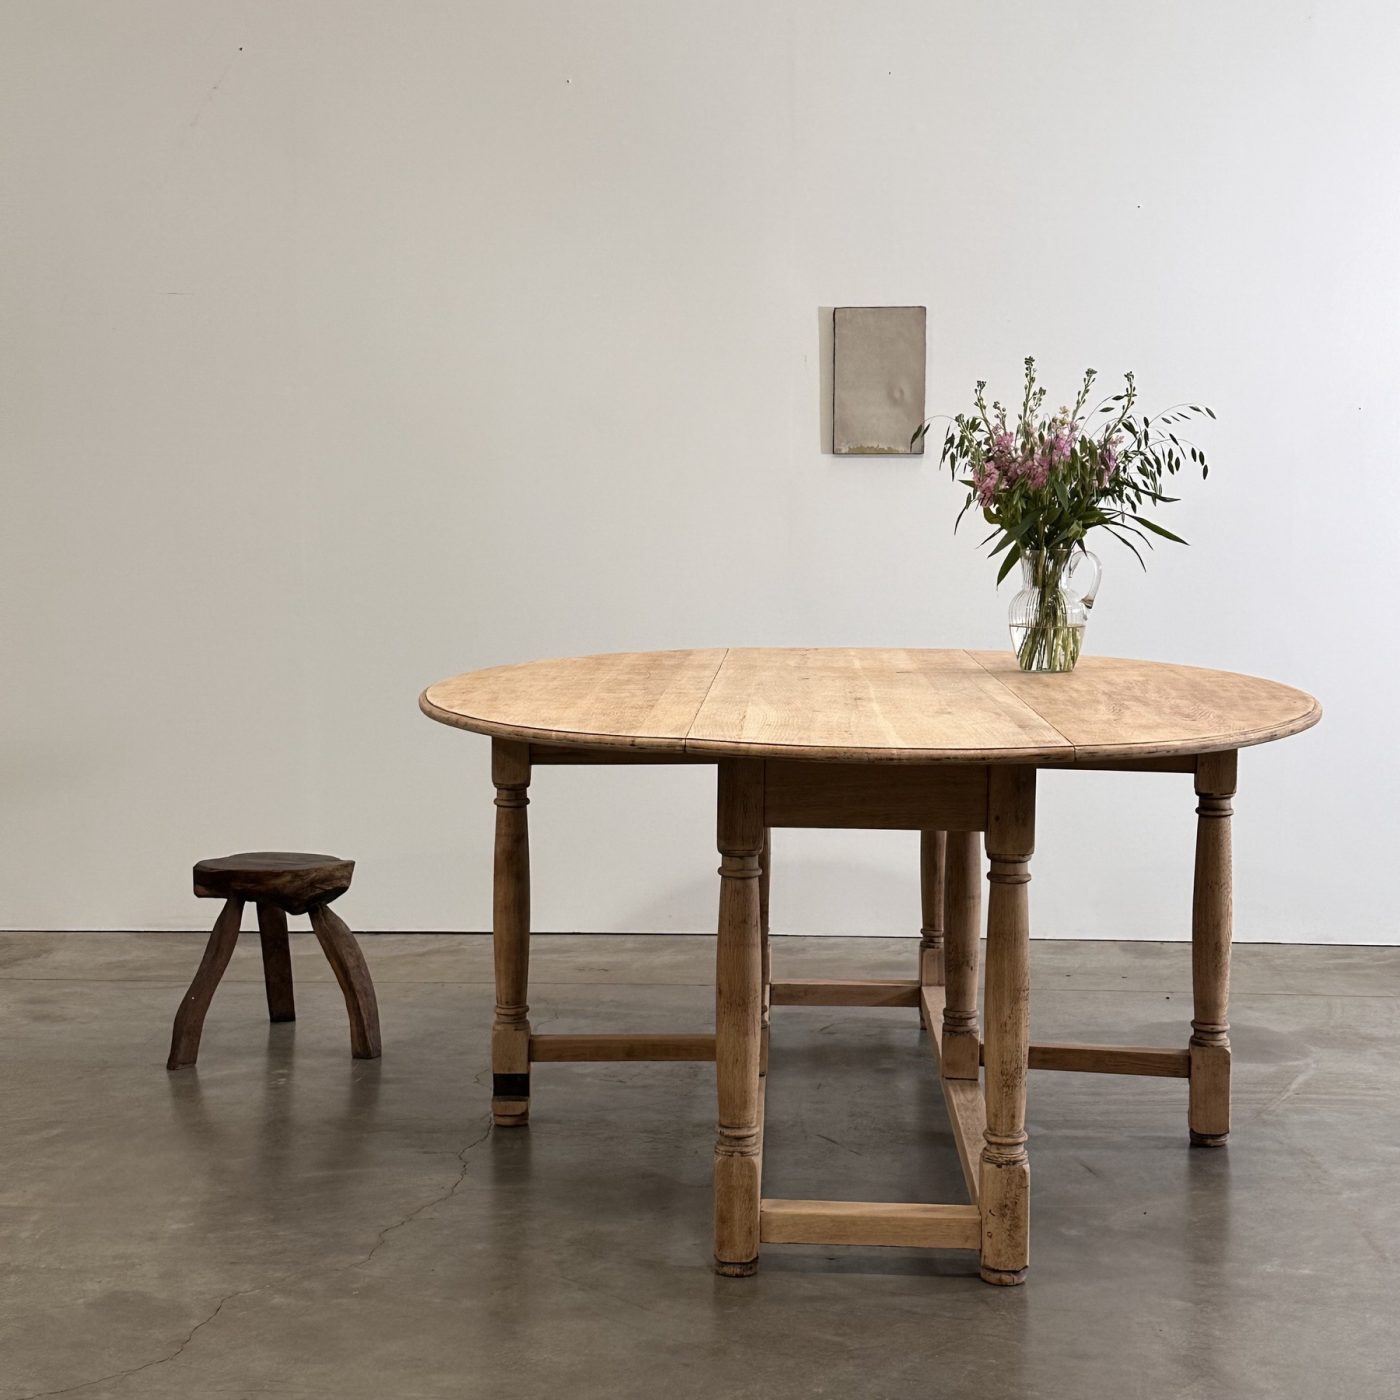 objet-vagabond-gateleg-table0005